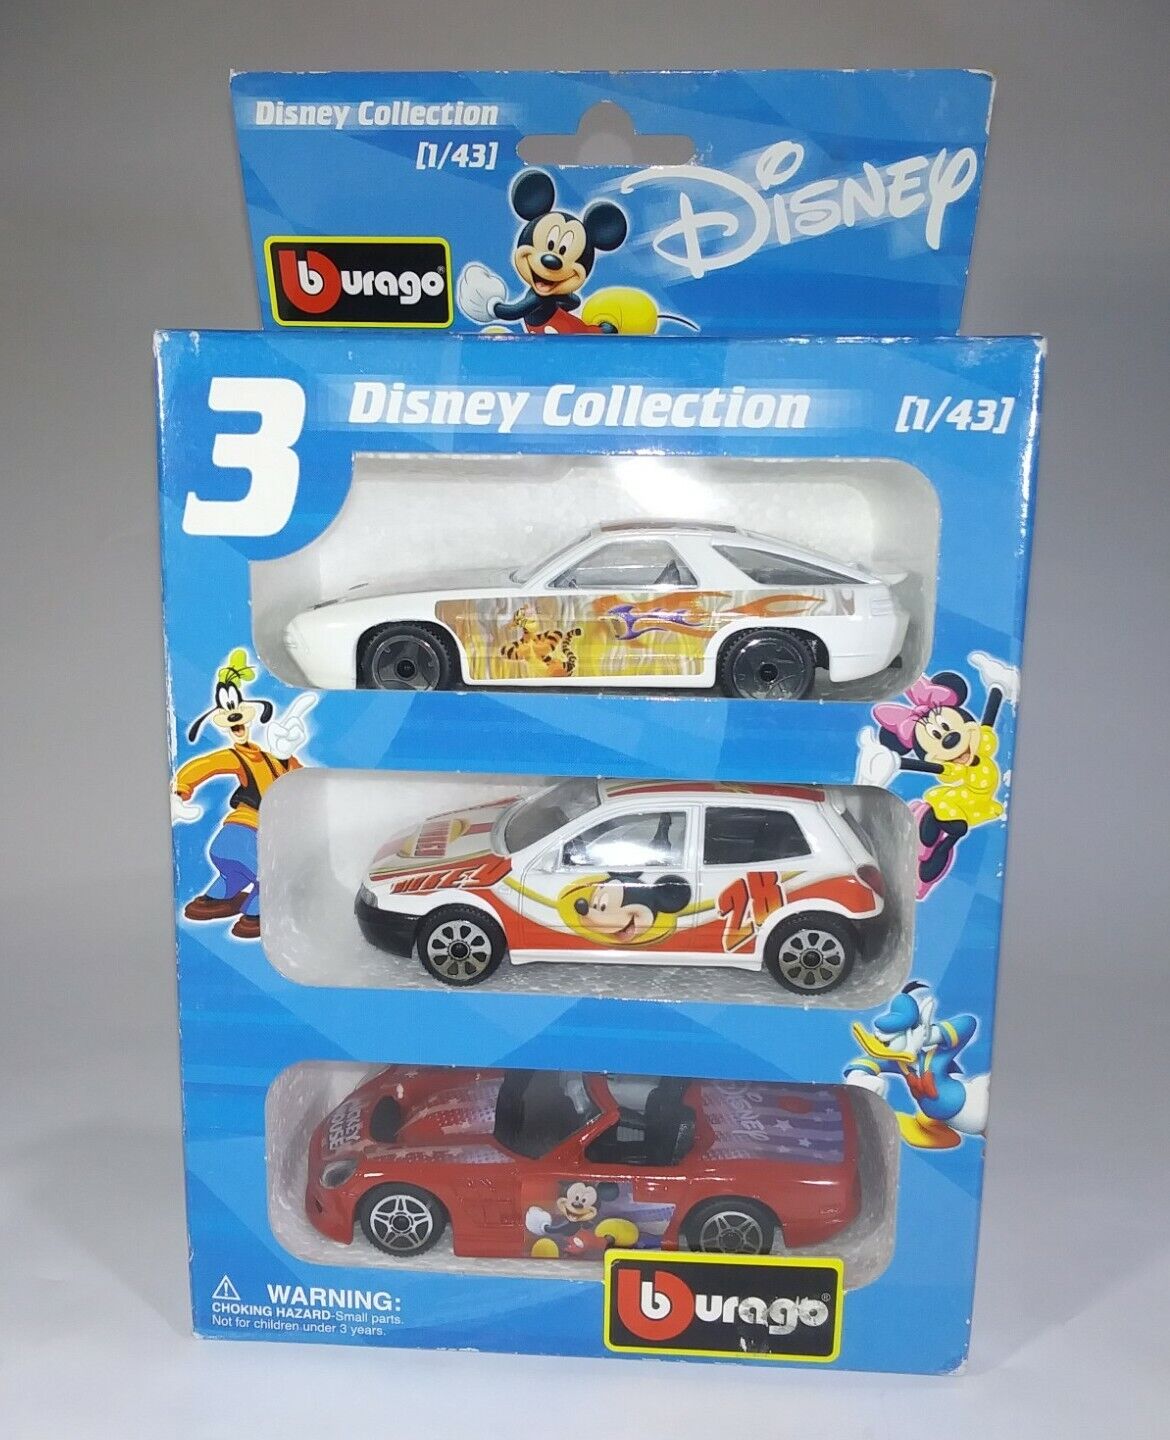 Burago Disney 1/43 Scale Collection 3 Diecast Cars w/ Mickey & Tigger #2590 MIB